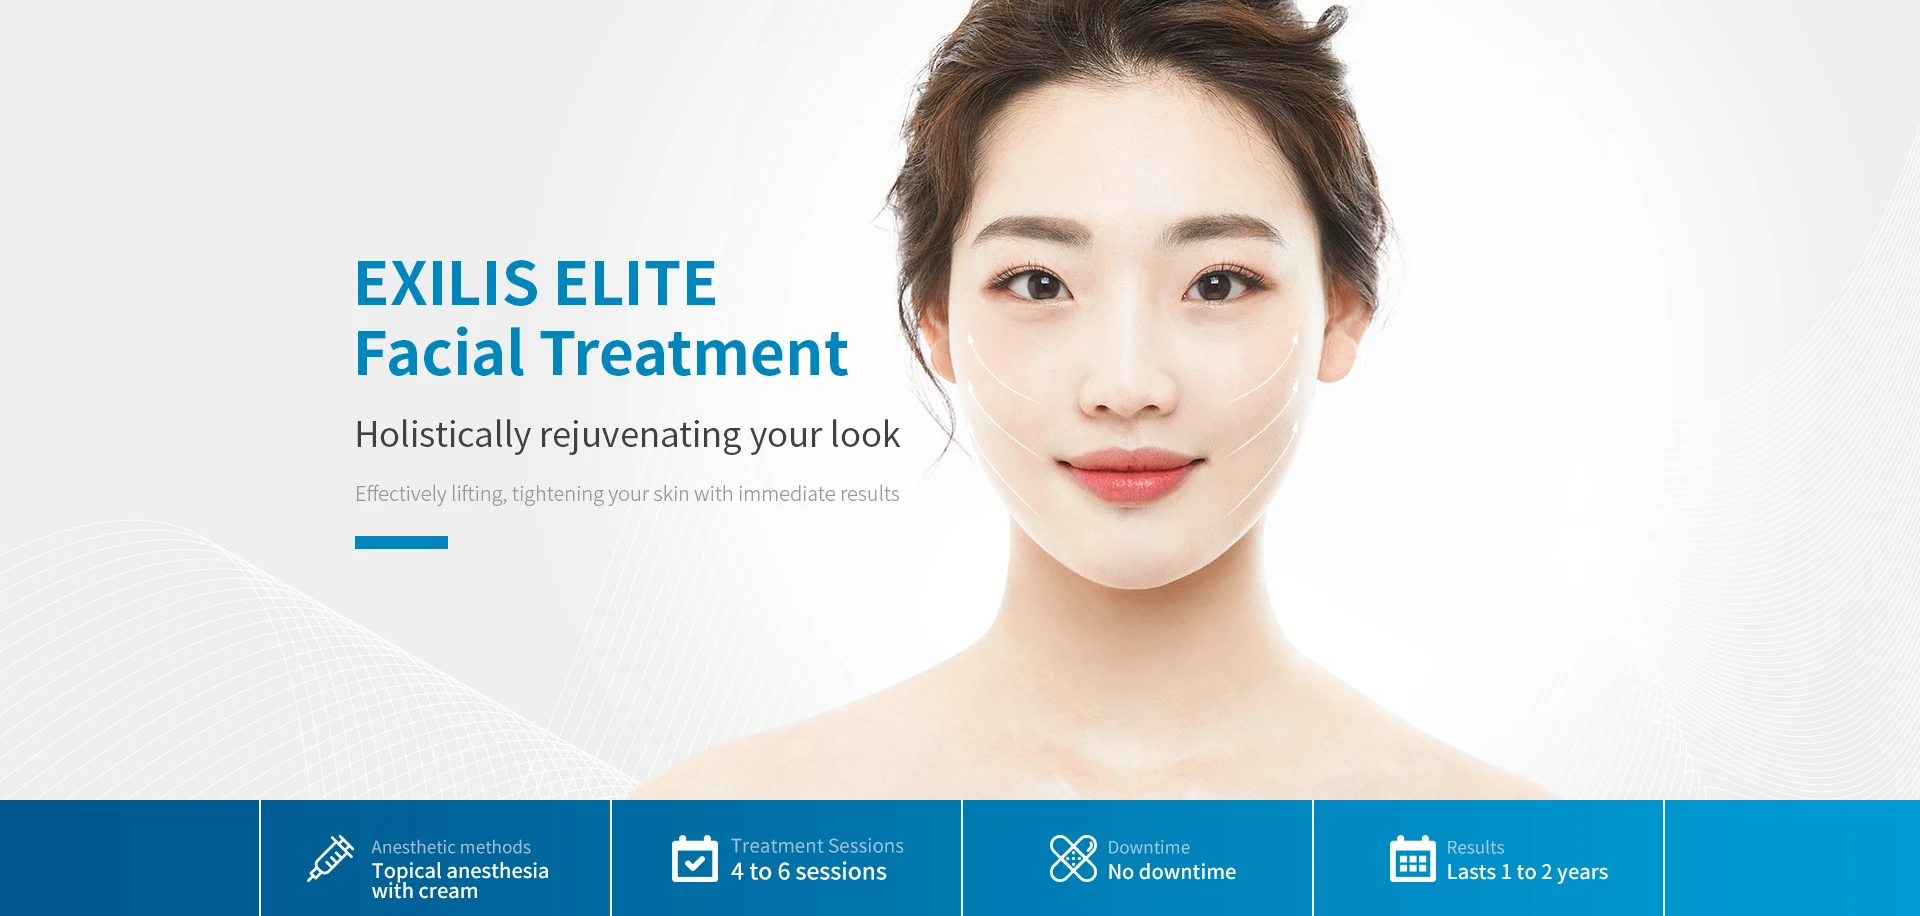 EXILIS ELITE Facial Treatment | Holistically rejuvenating your look